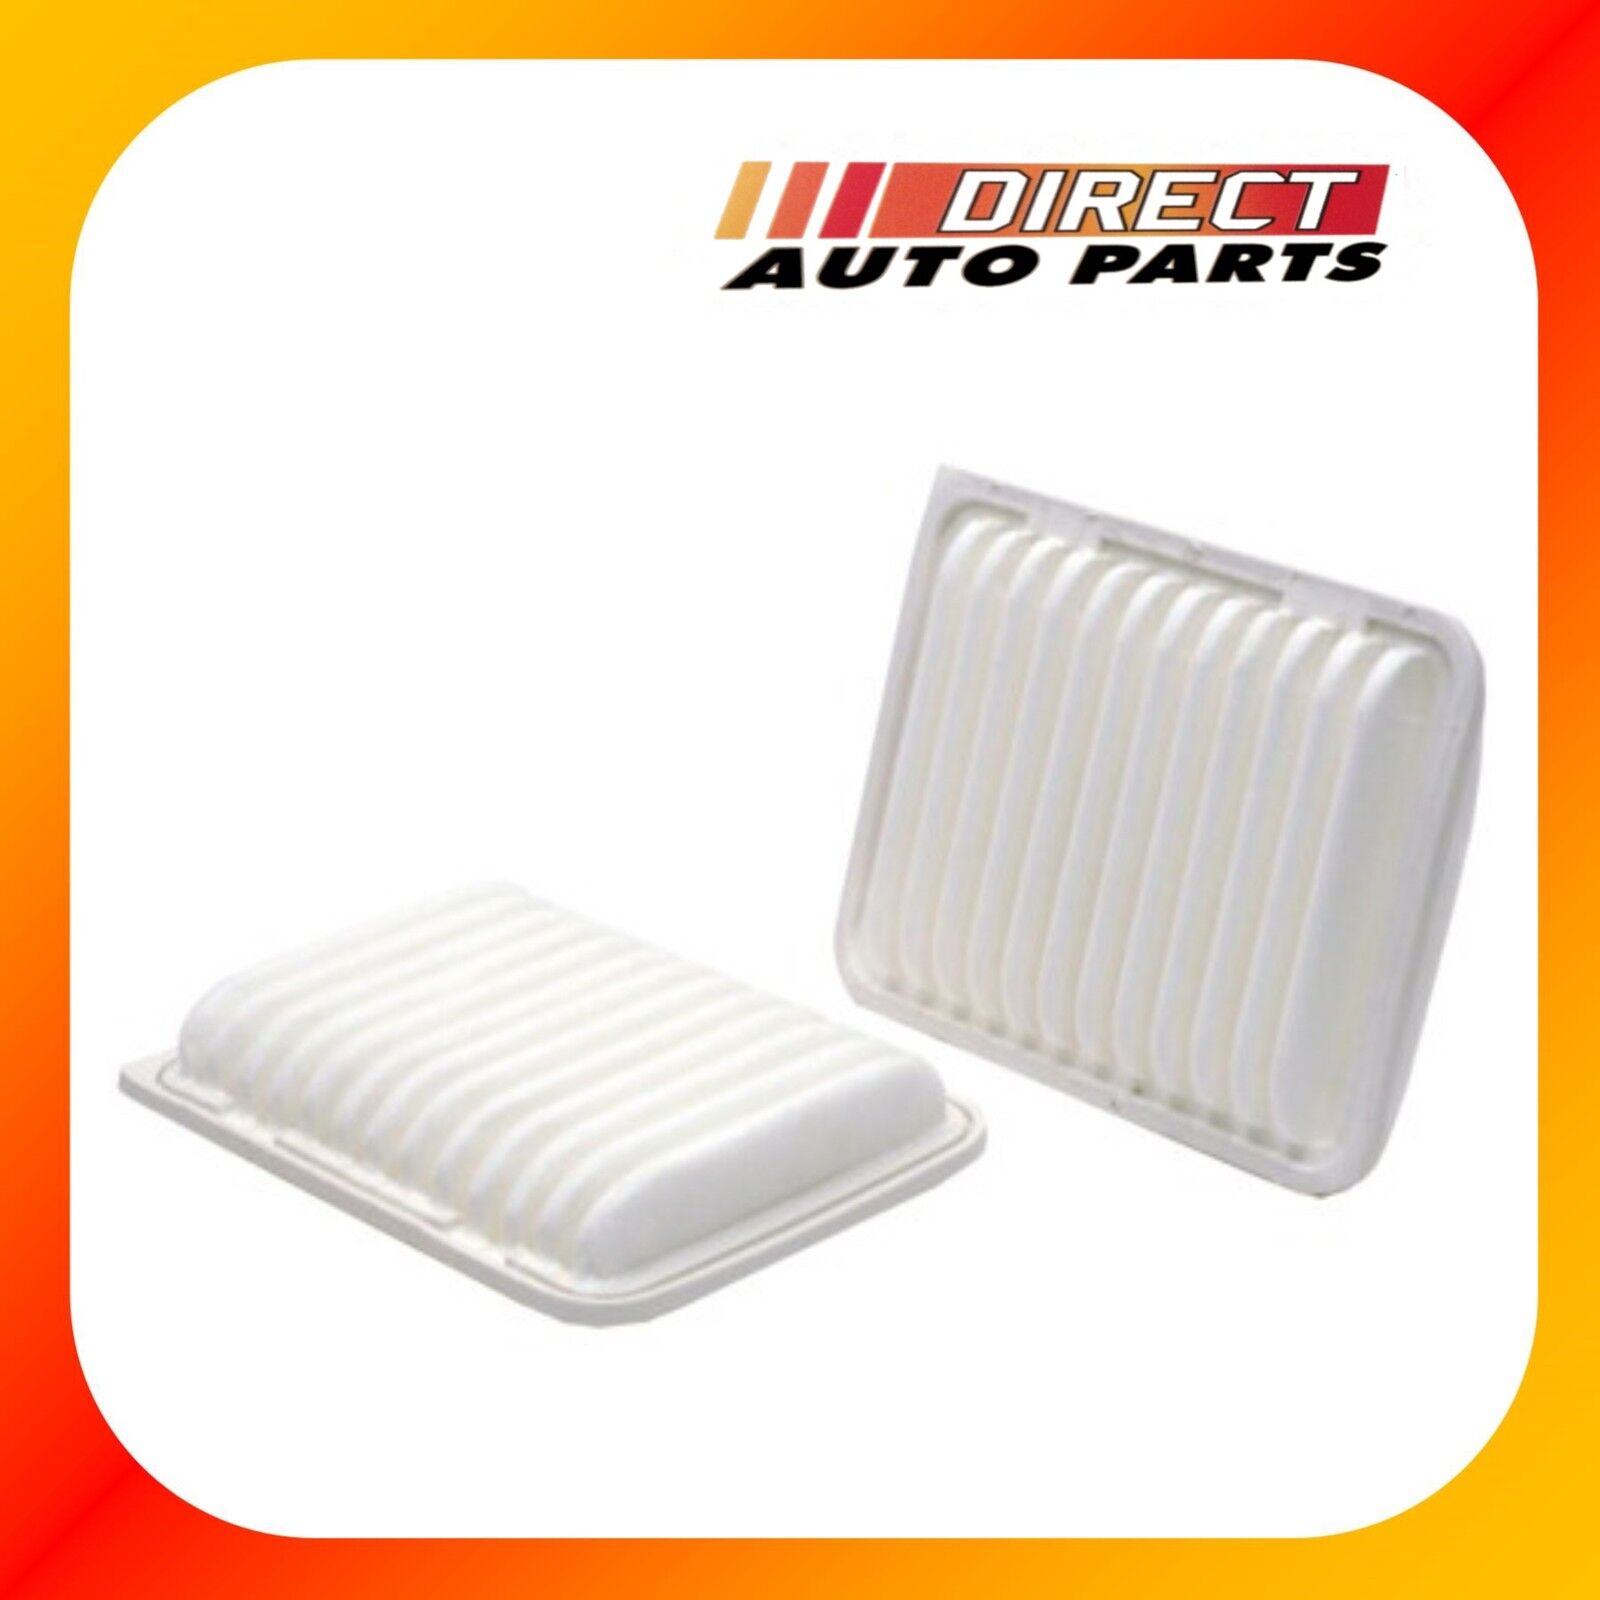 Air Filter For Toyota Corolla Matrix Yaris Air Filter OE# 17801-21050